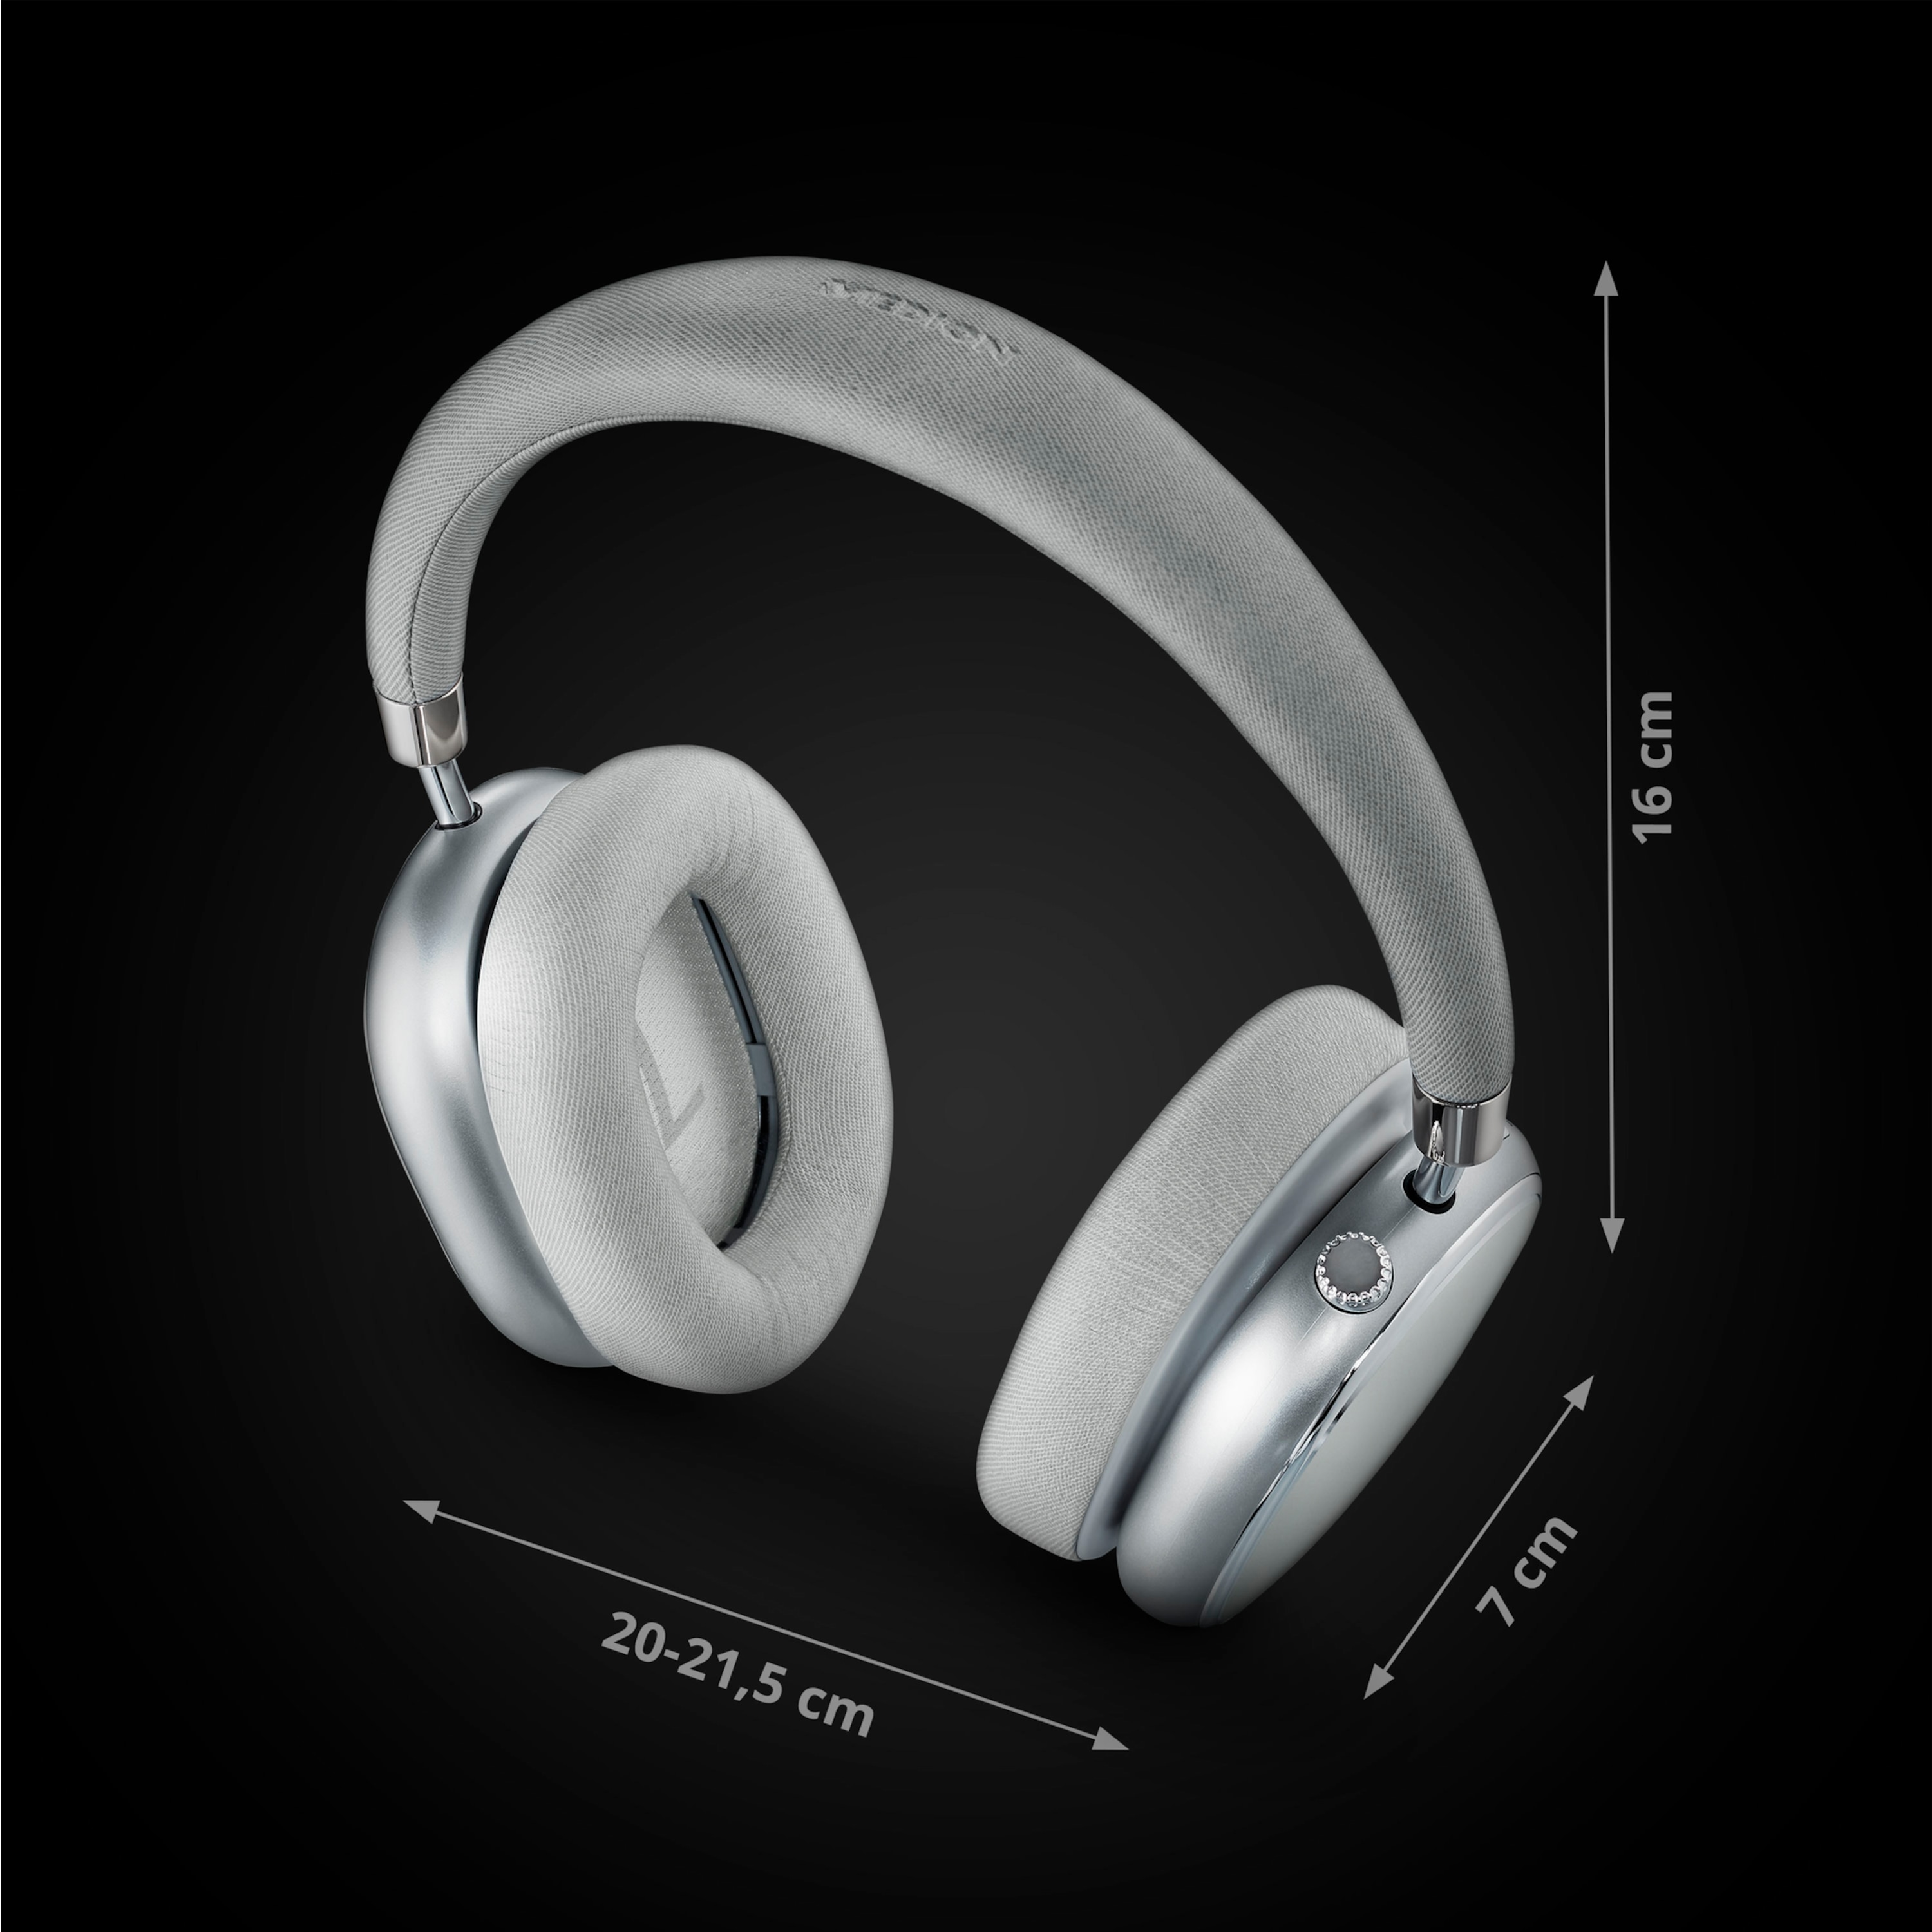 Akkulaufzeit, Kopfhörer Bluetooth®, LIFE® MEDION kabellos kabelgebunden, E62474, Active-Noise-Cancelling, lange oder Over-ear silber